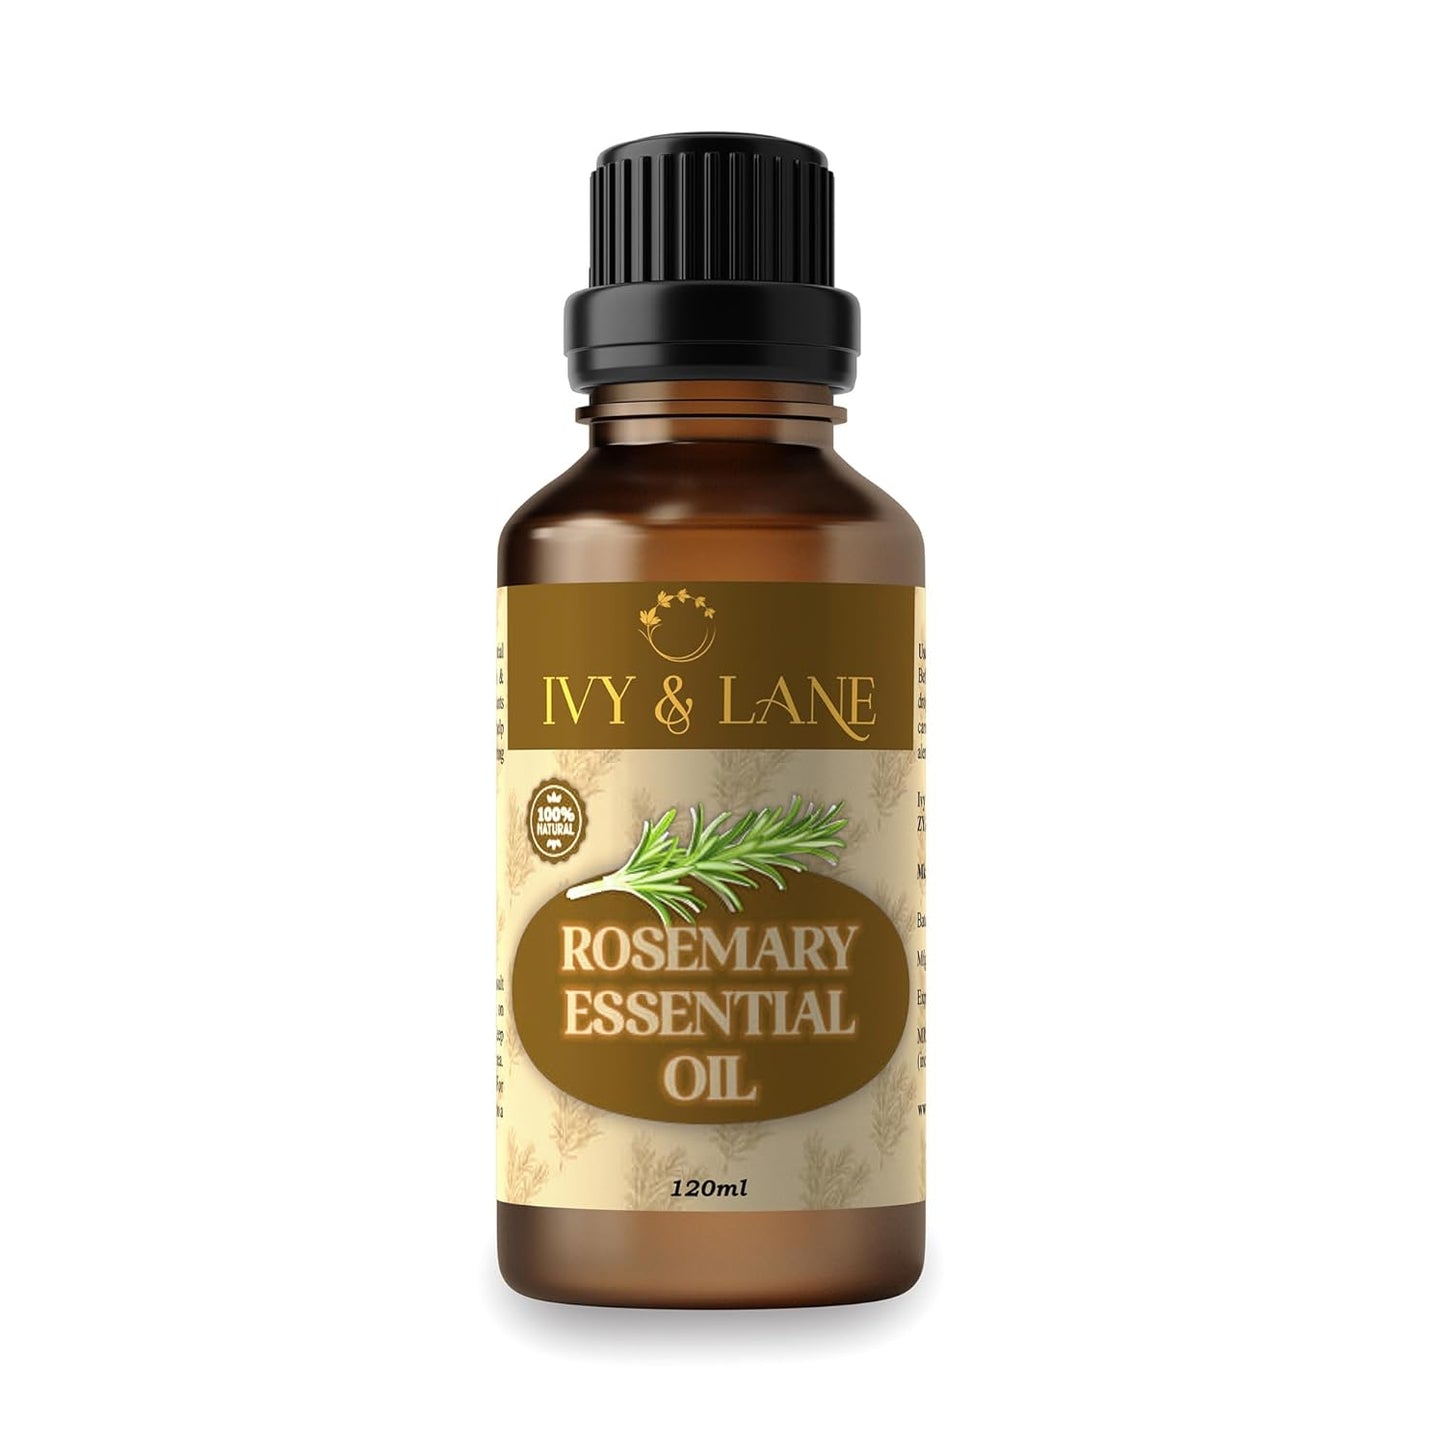 Ivy & Lane Rosemary Essential Oil